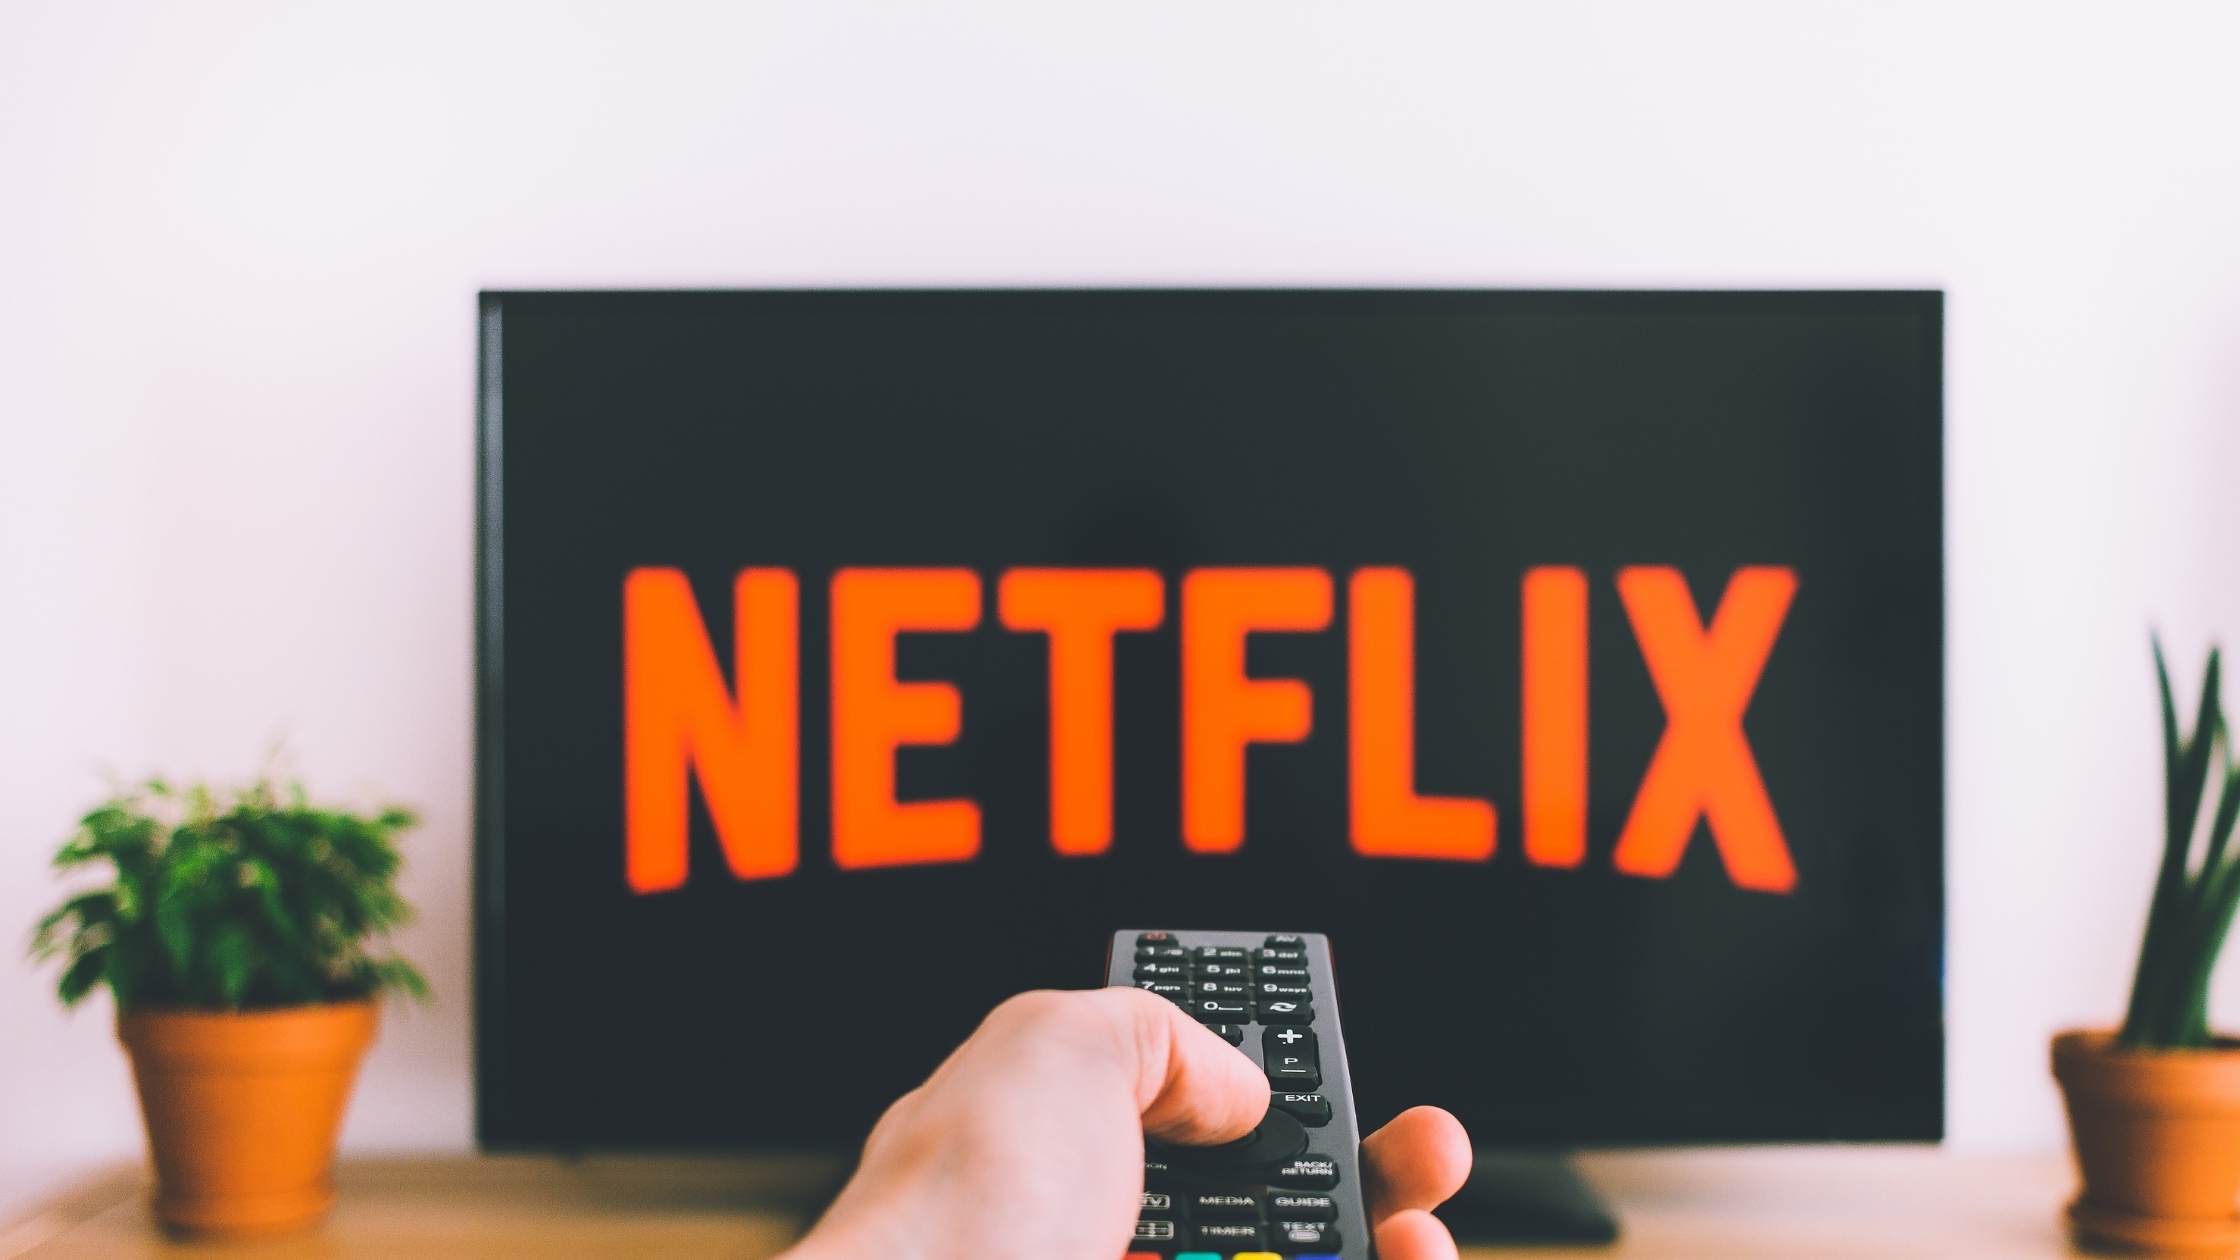 Netflix Market Share Vs Competitors